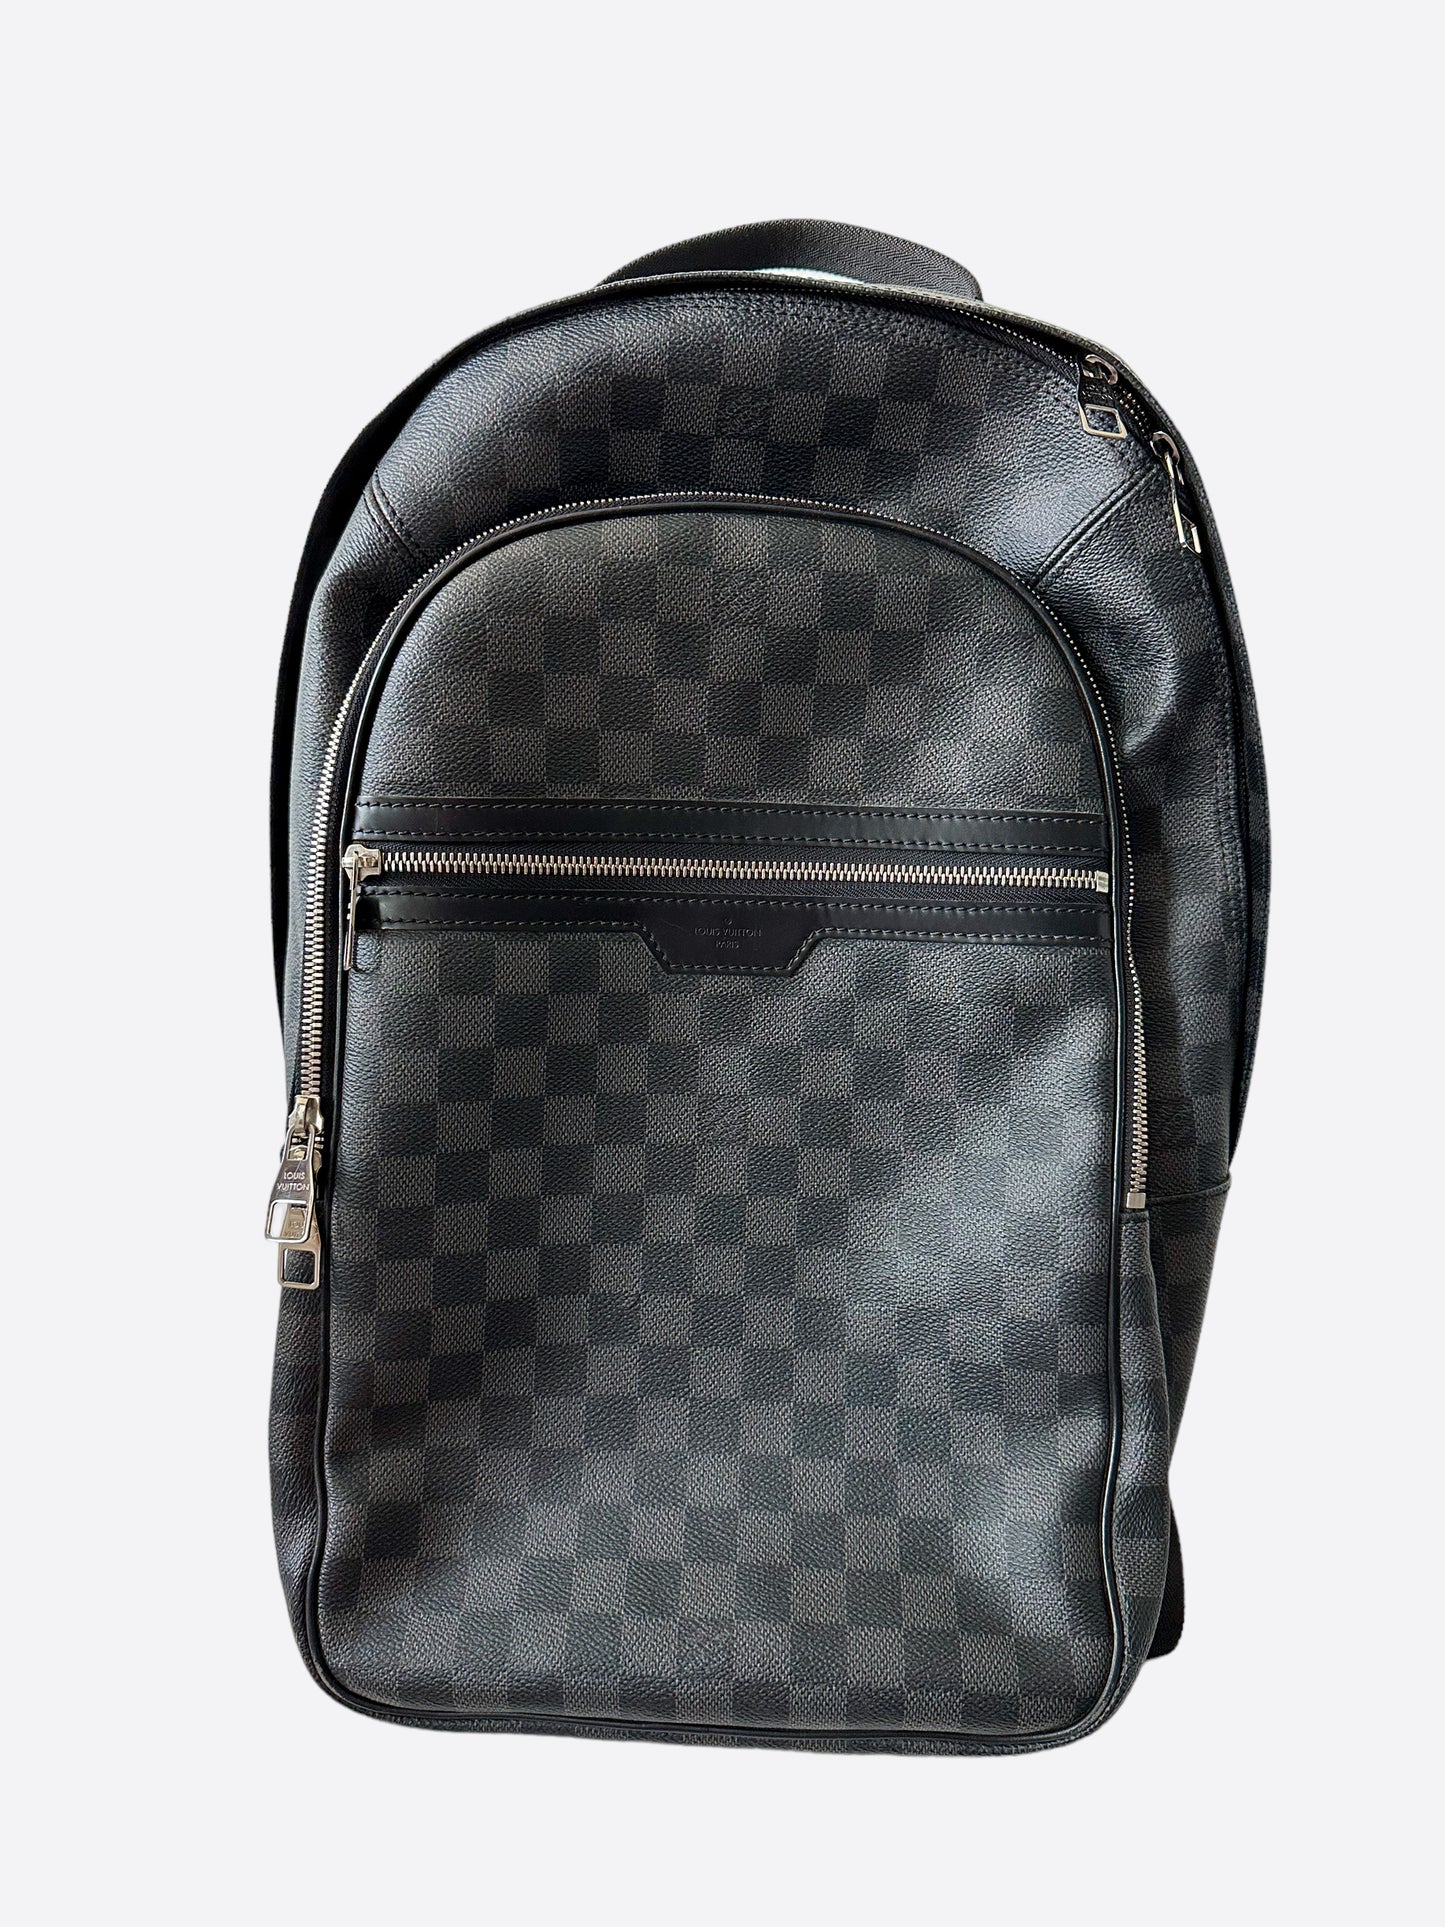 Shop Louis Vuitton DAMIER GRAPHITE Unisex Leather Backpacks by